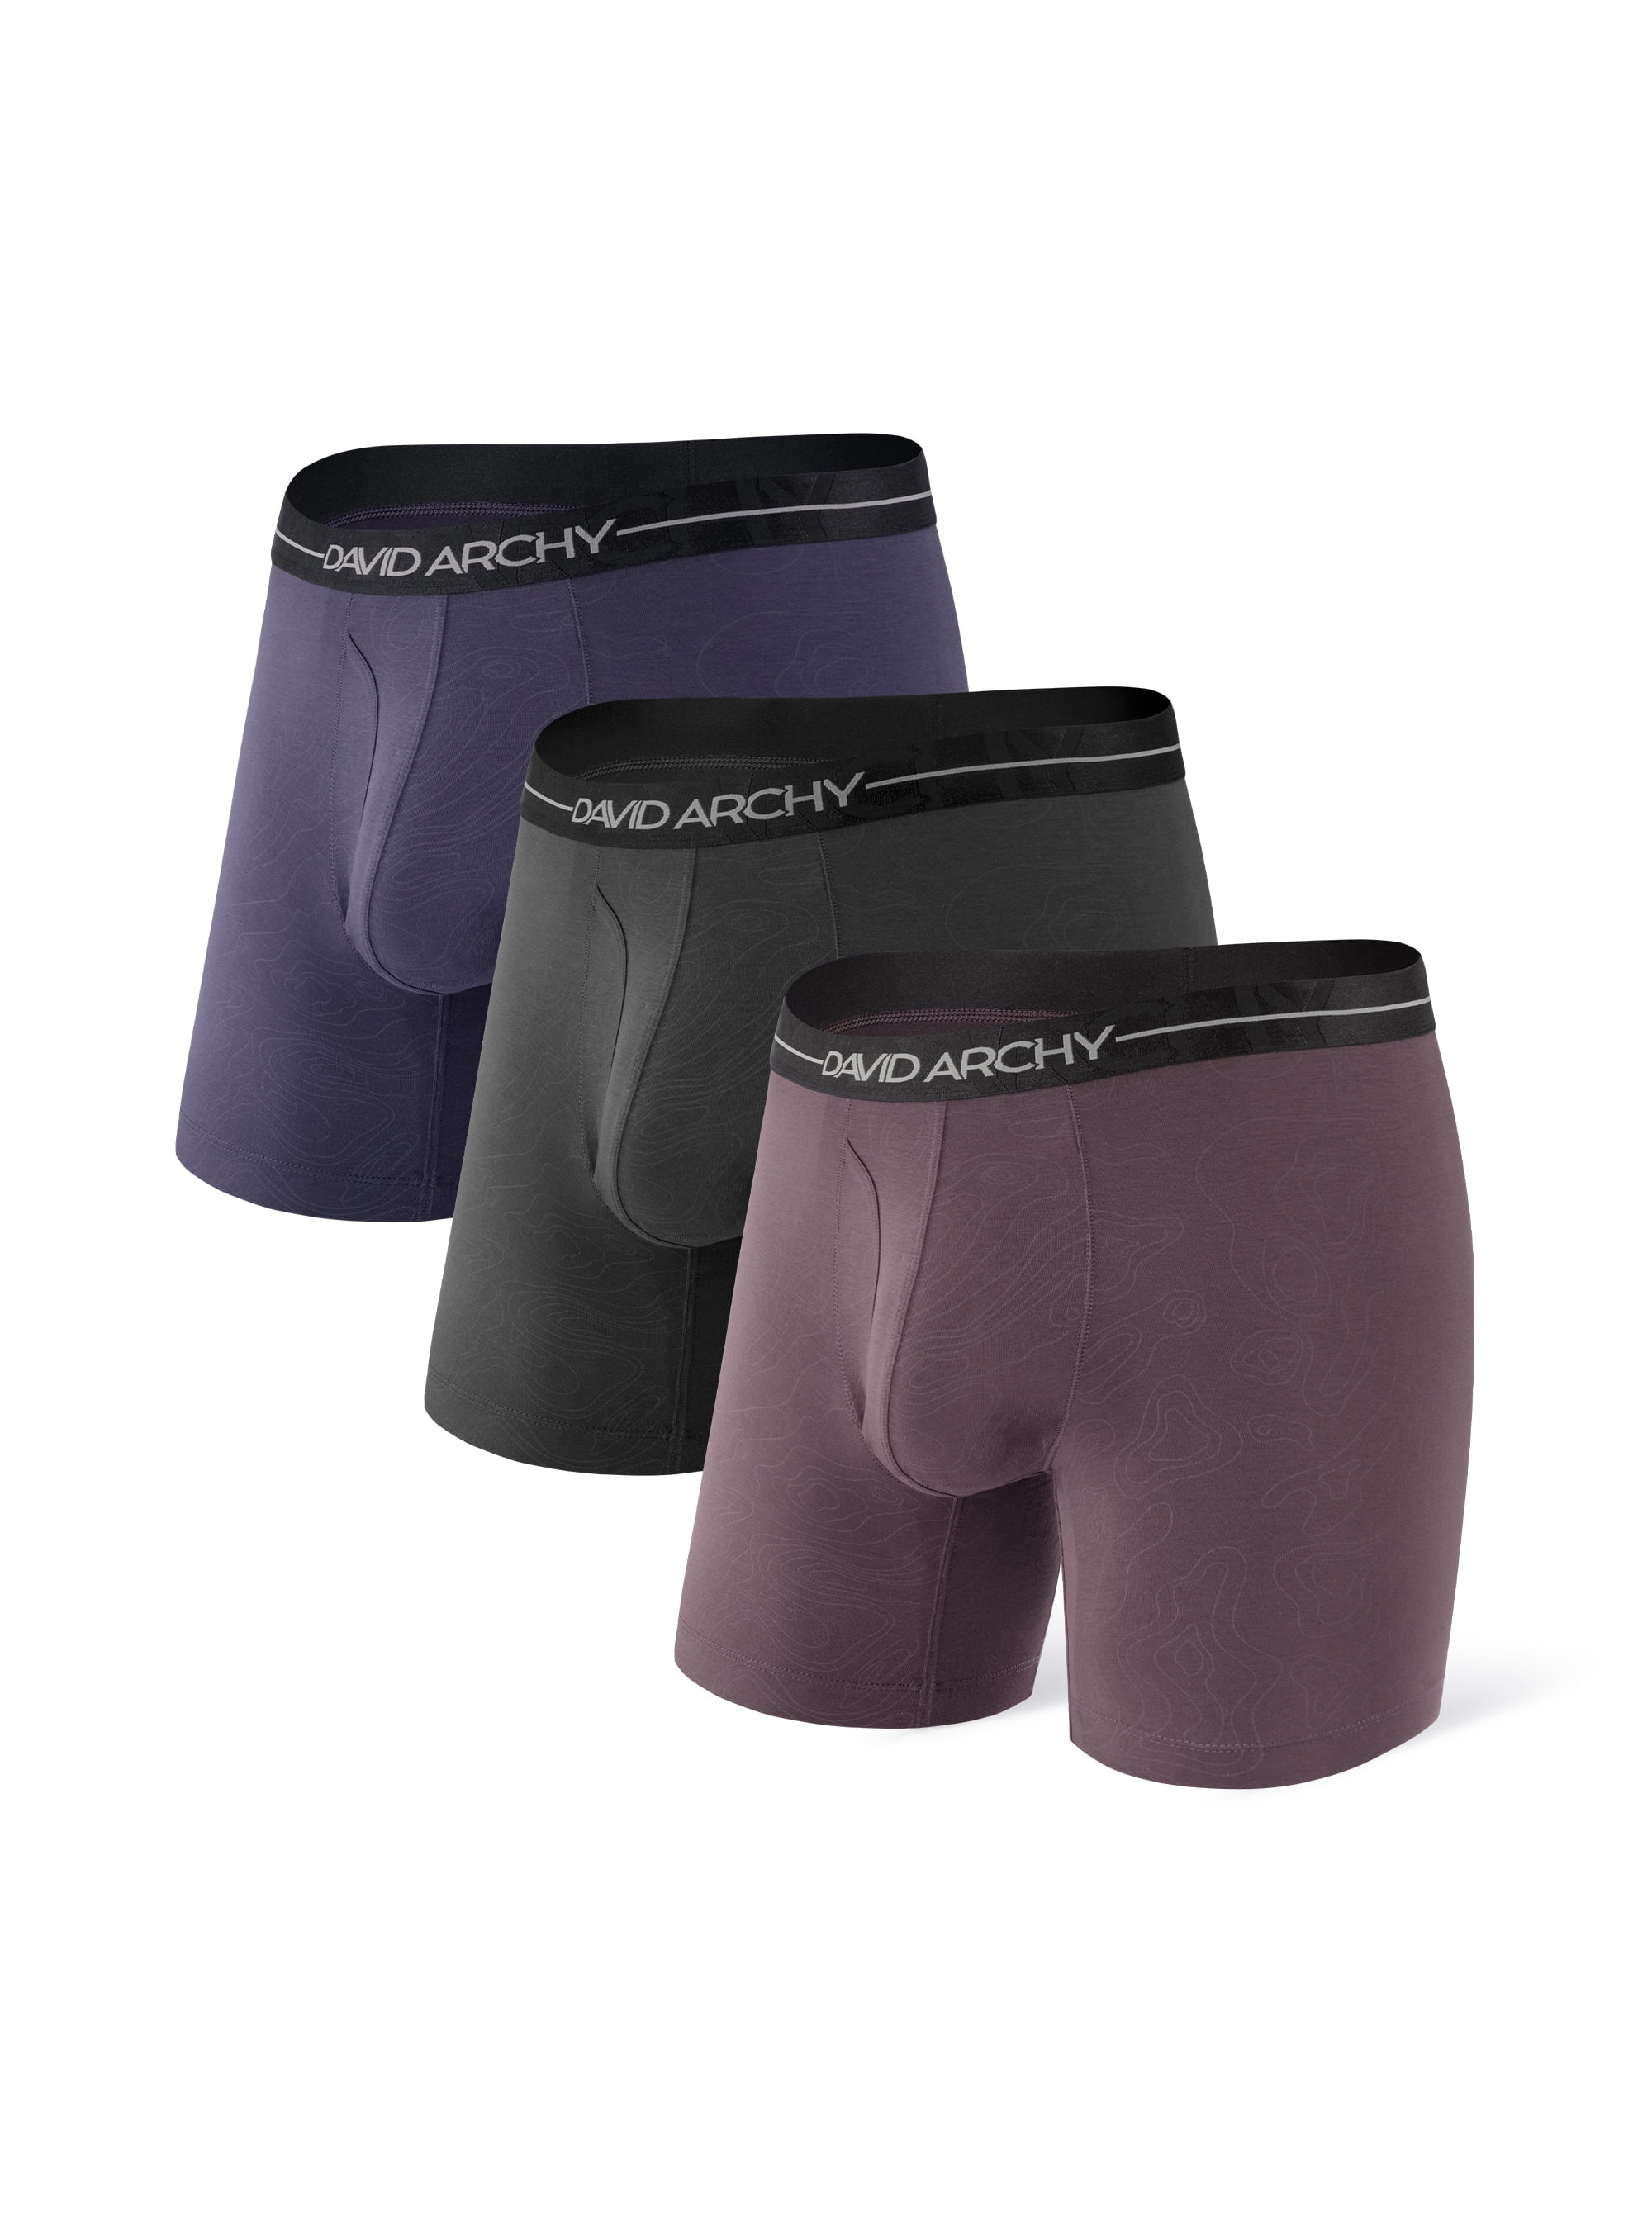 DAVID ARCHY Adult Men's Underwear Ultra Soft Micro Modal Boxer Briefs ...